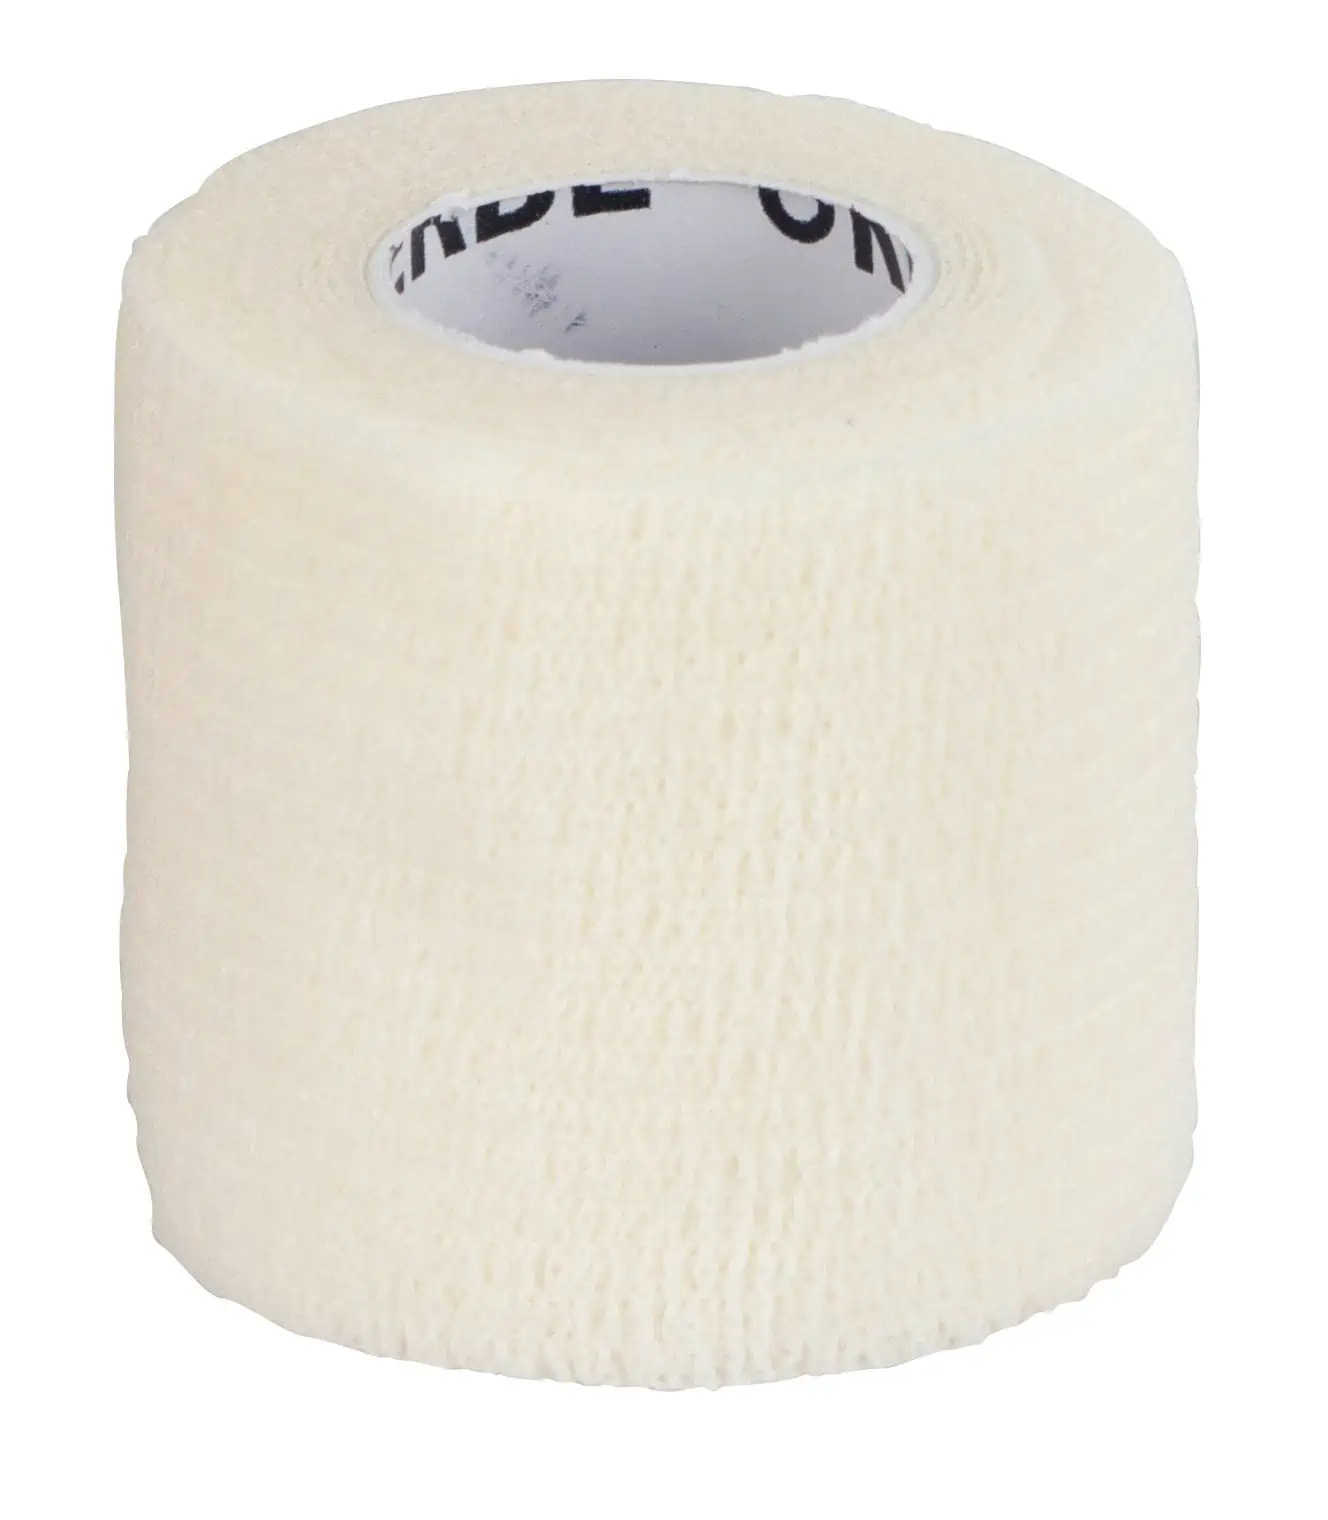 EquiLastic selbsthaftende Bandage, weiß, 5 cm breit